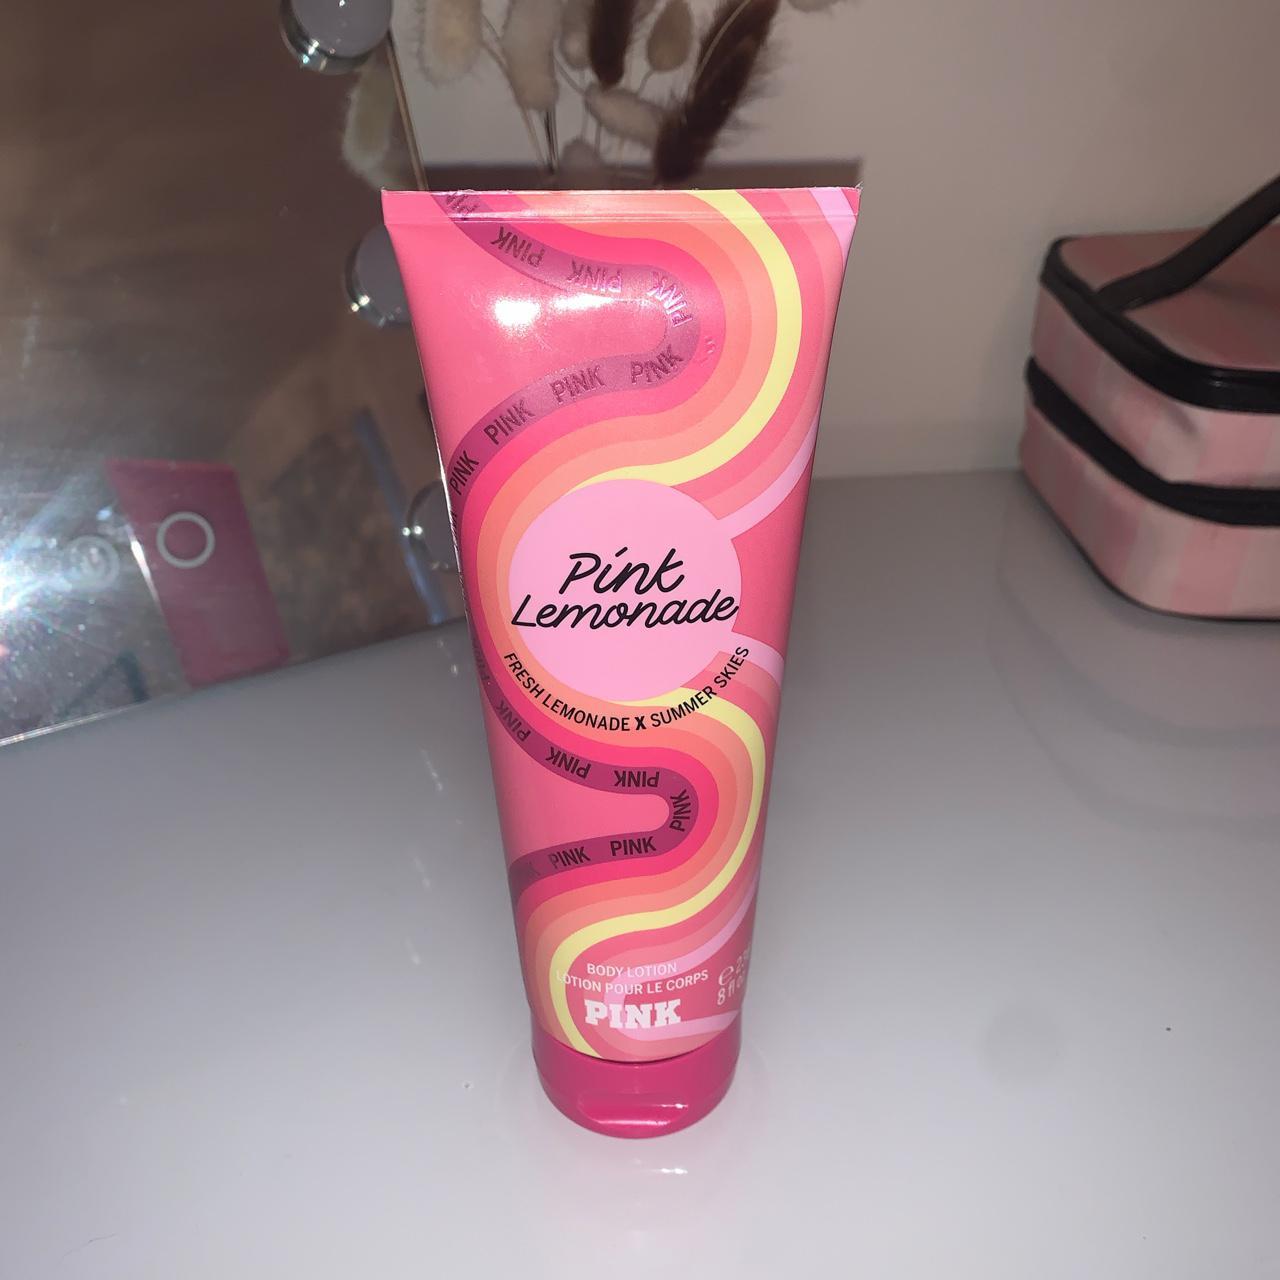 Product Image 1 - Brand new pink Victoria secret